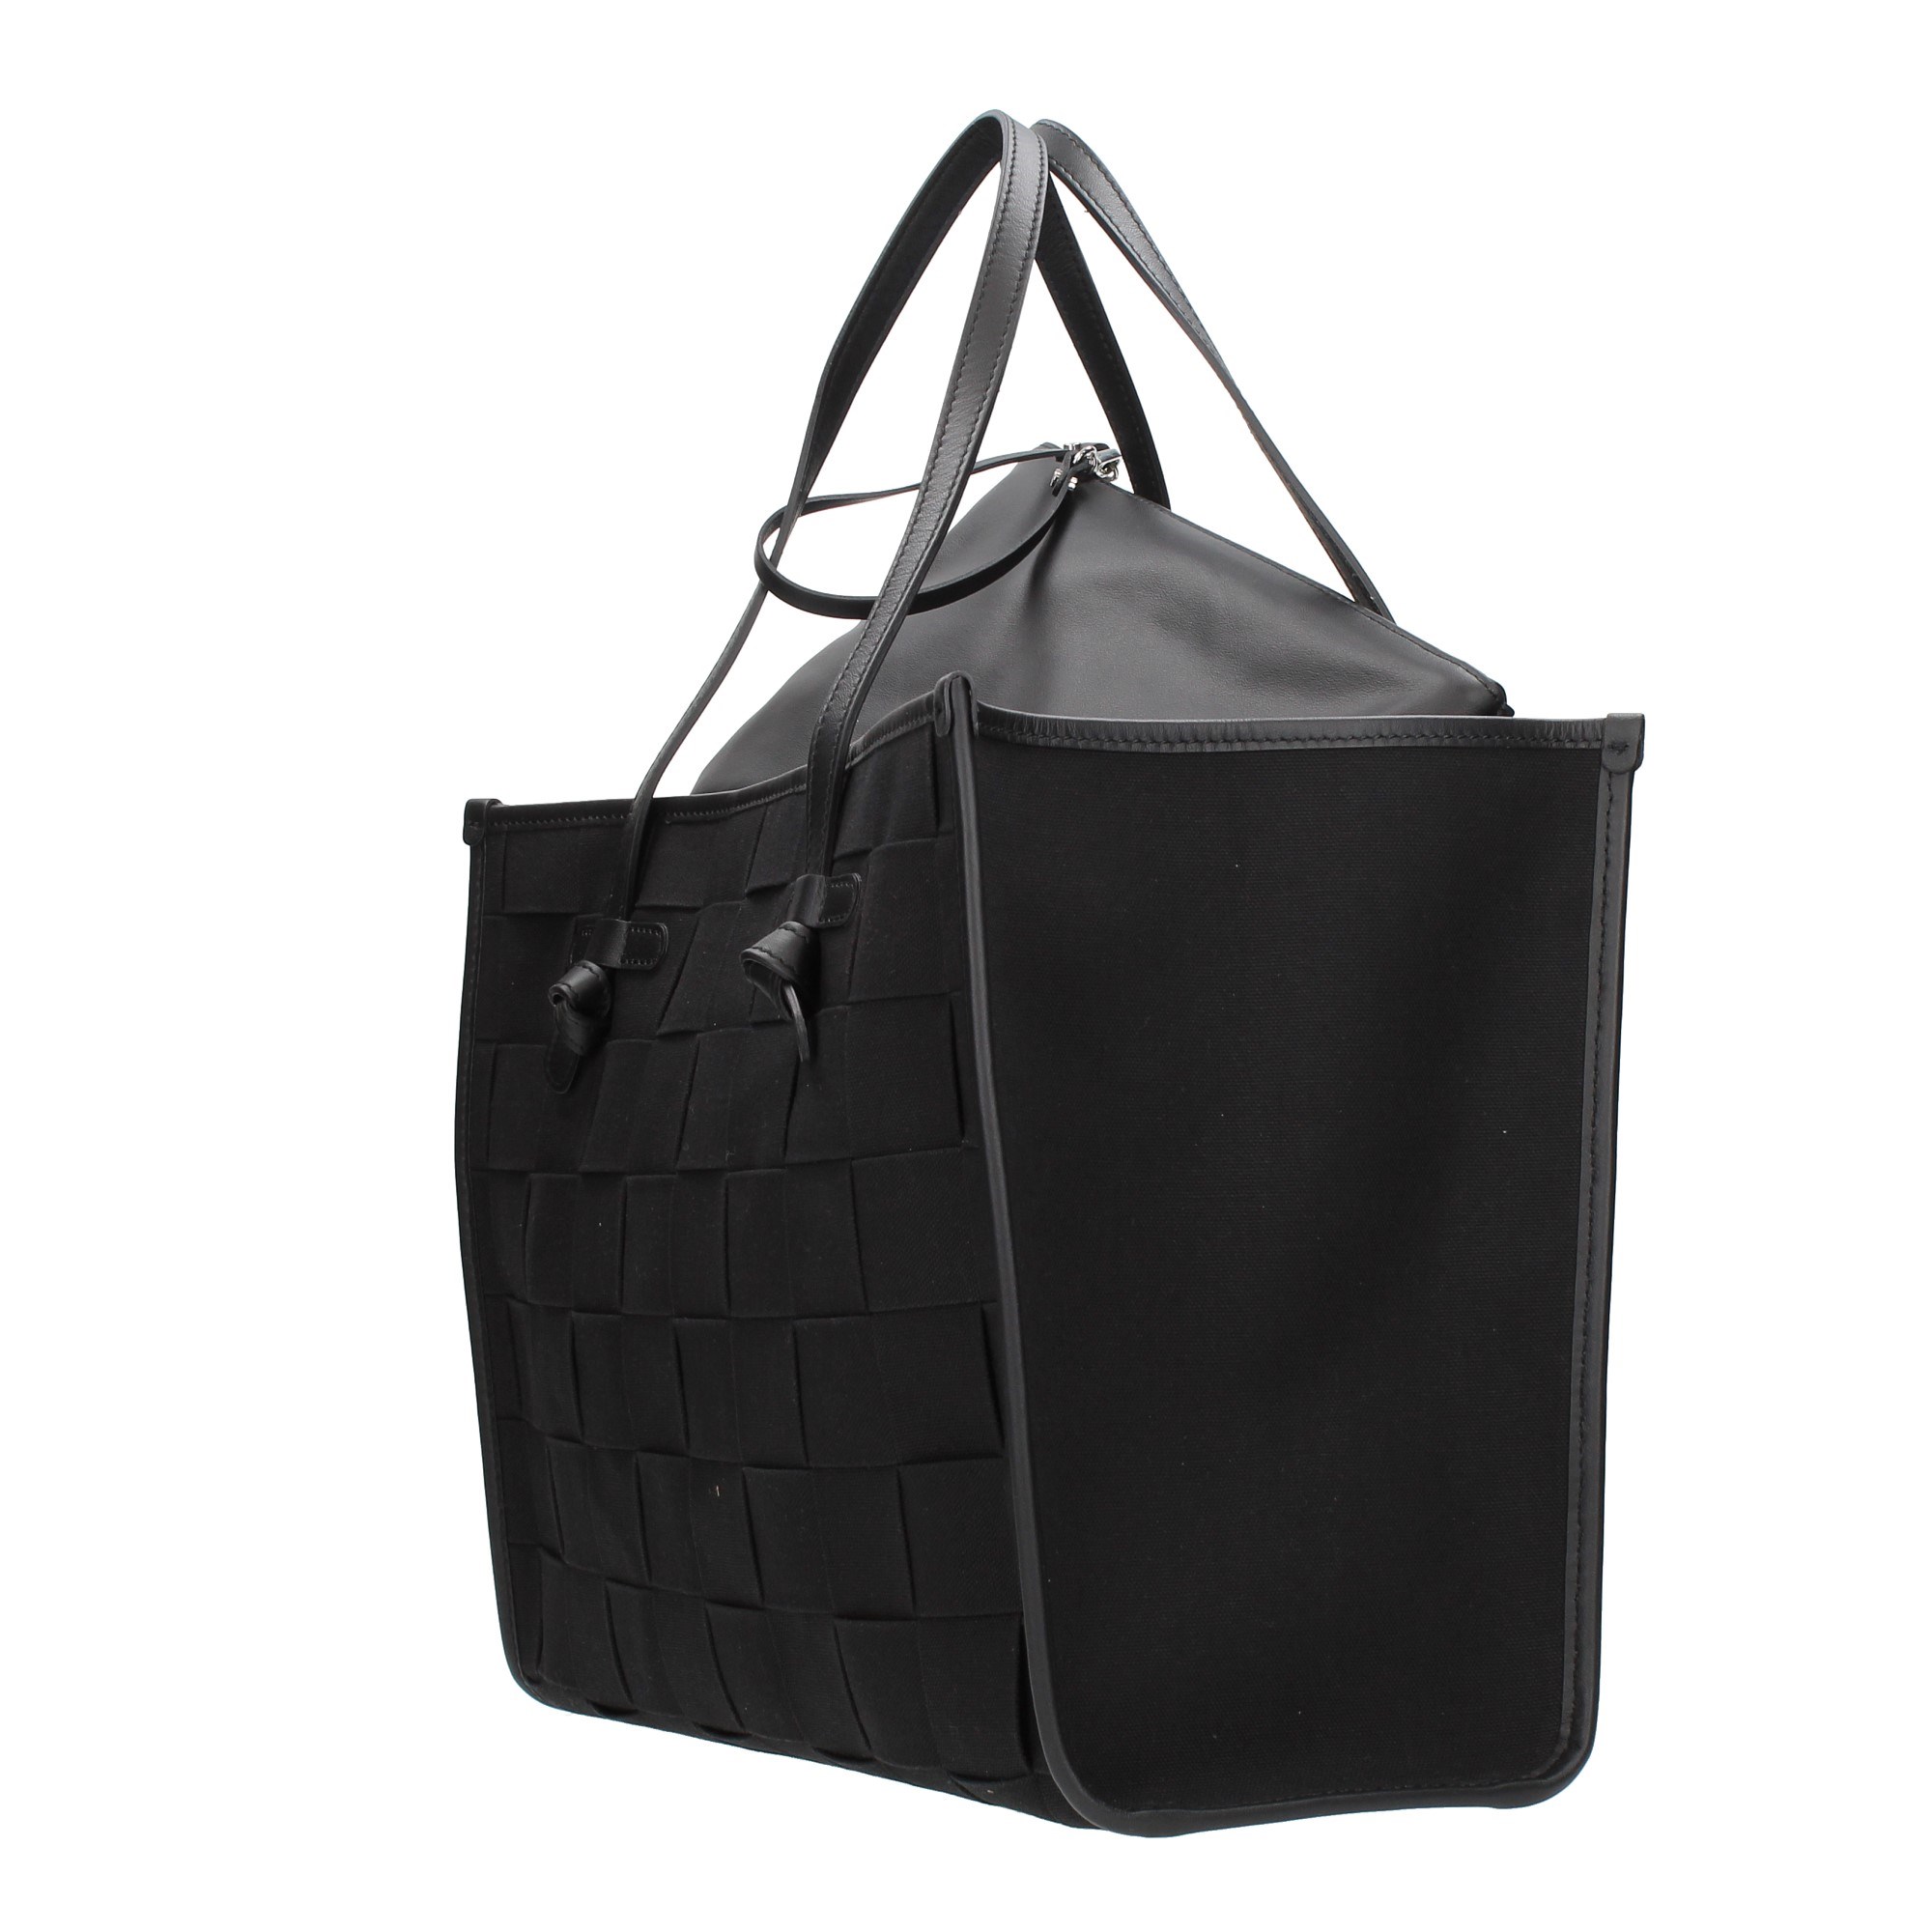 Marcella Club Gianni Chiarini Accessories Women Shoulder Bags Black BS8370 INT-CNV